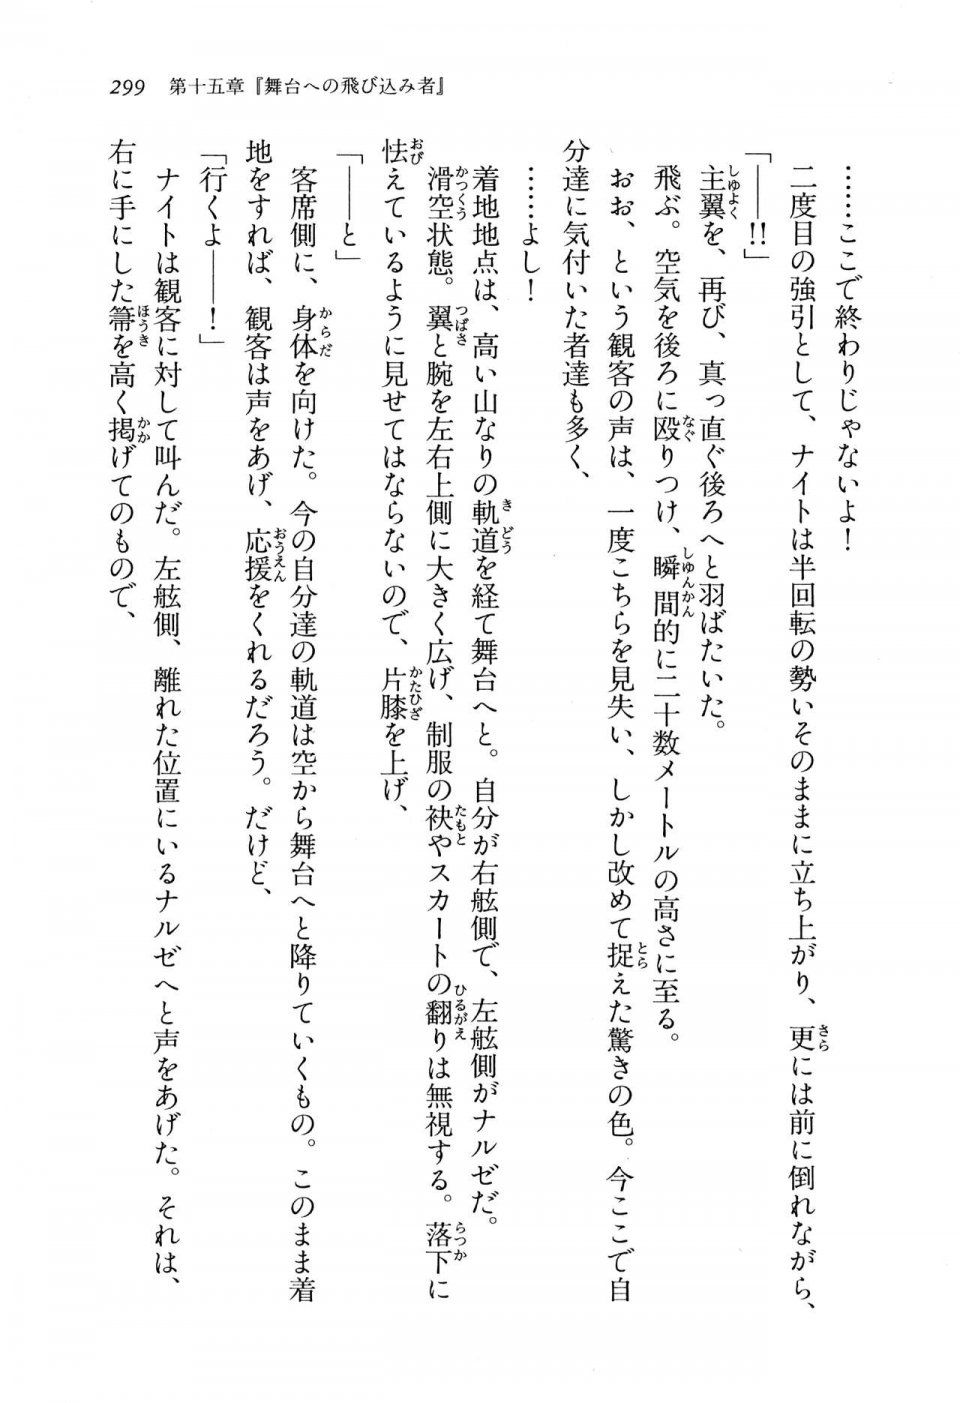 Kyoukai Senjou no Horizon BD Special Mininovel Vol 8(4B) - Photo #303